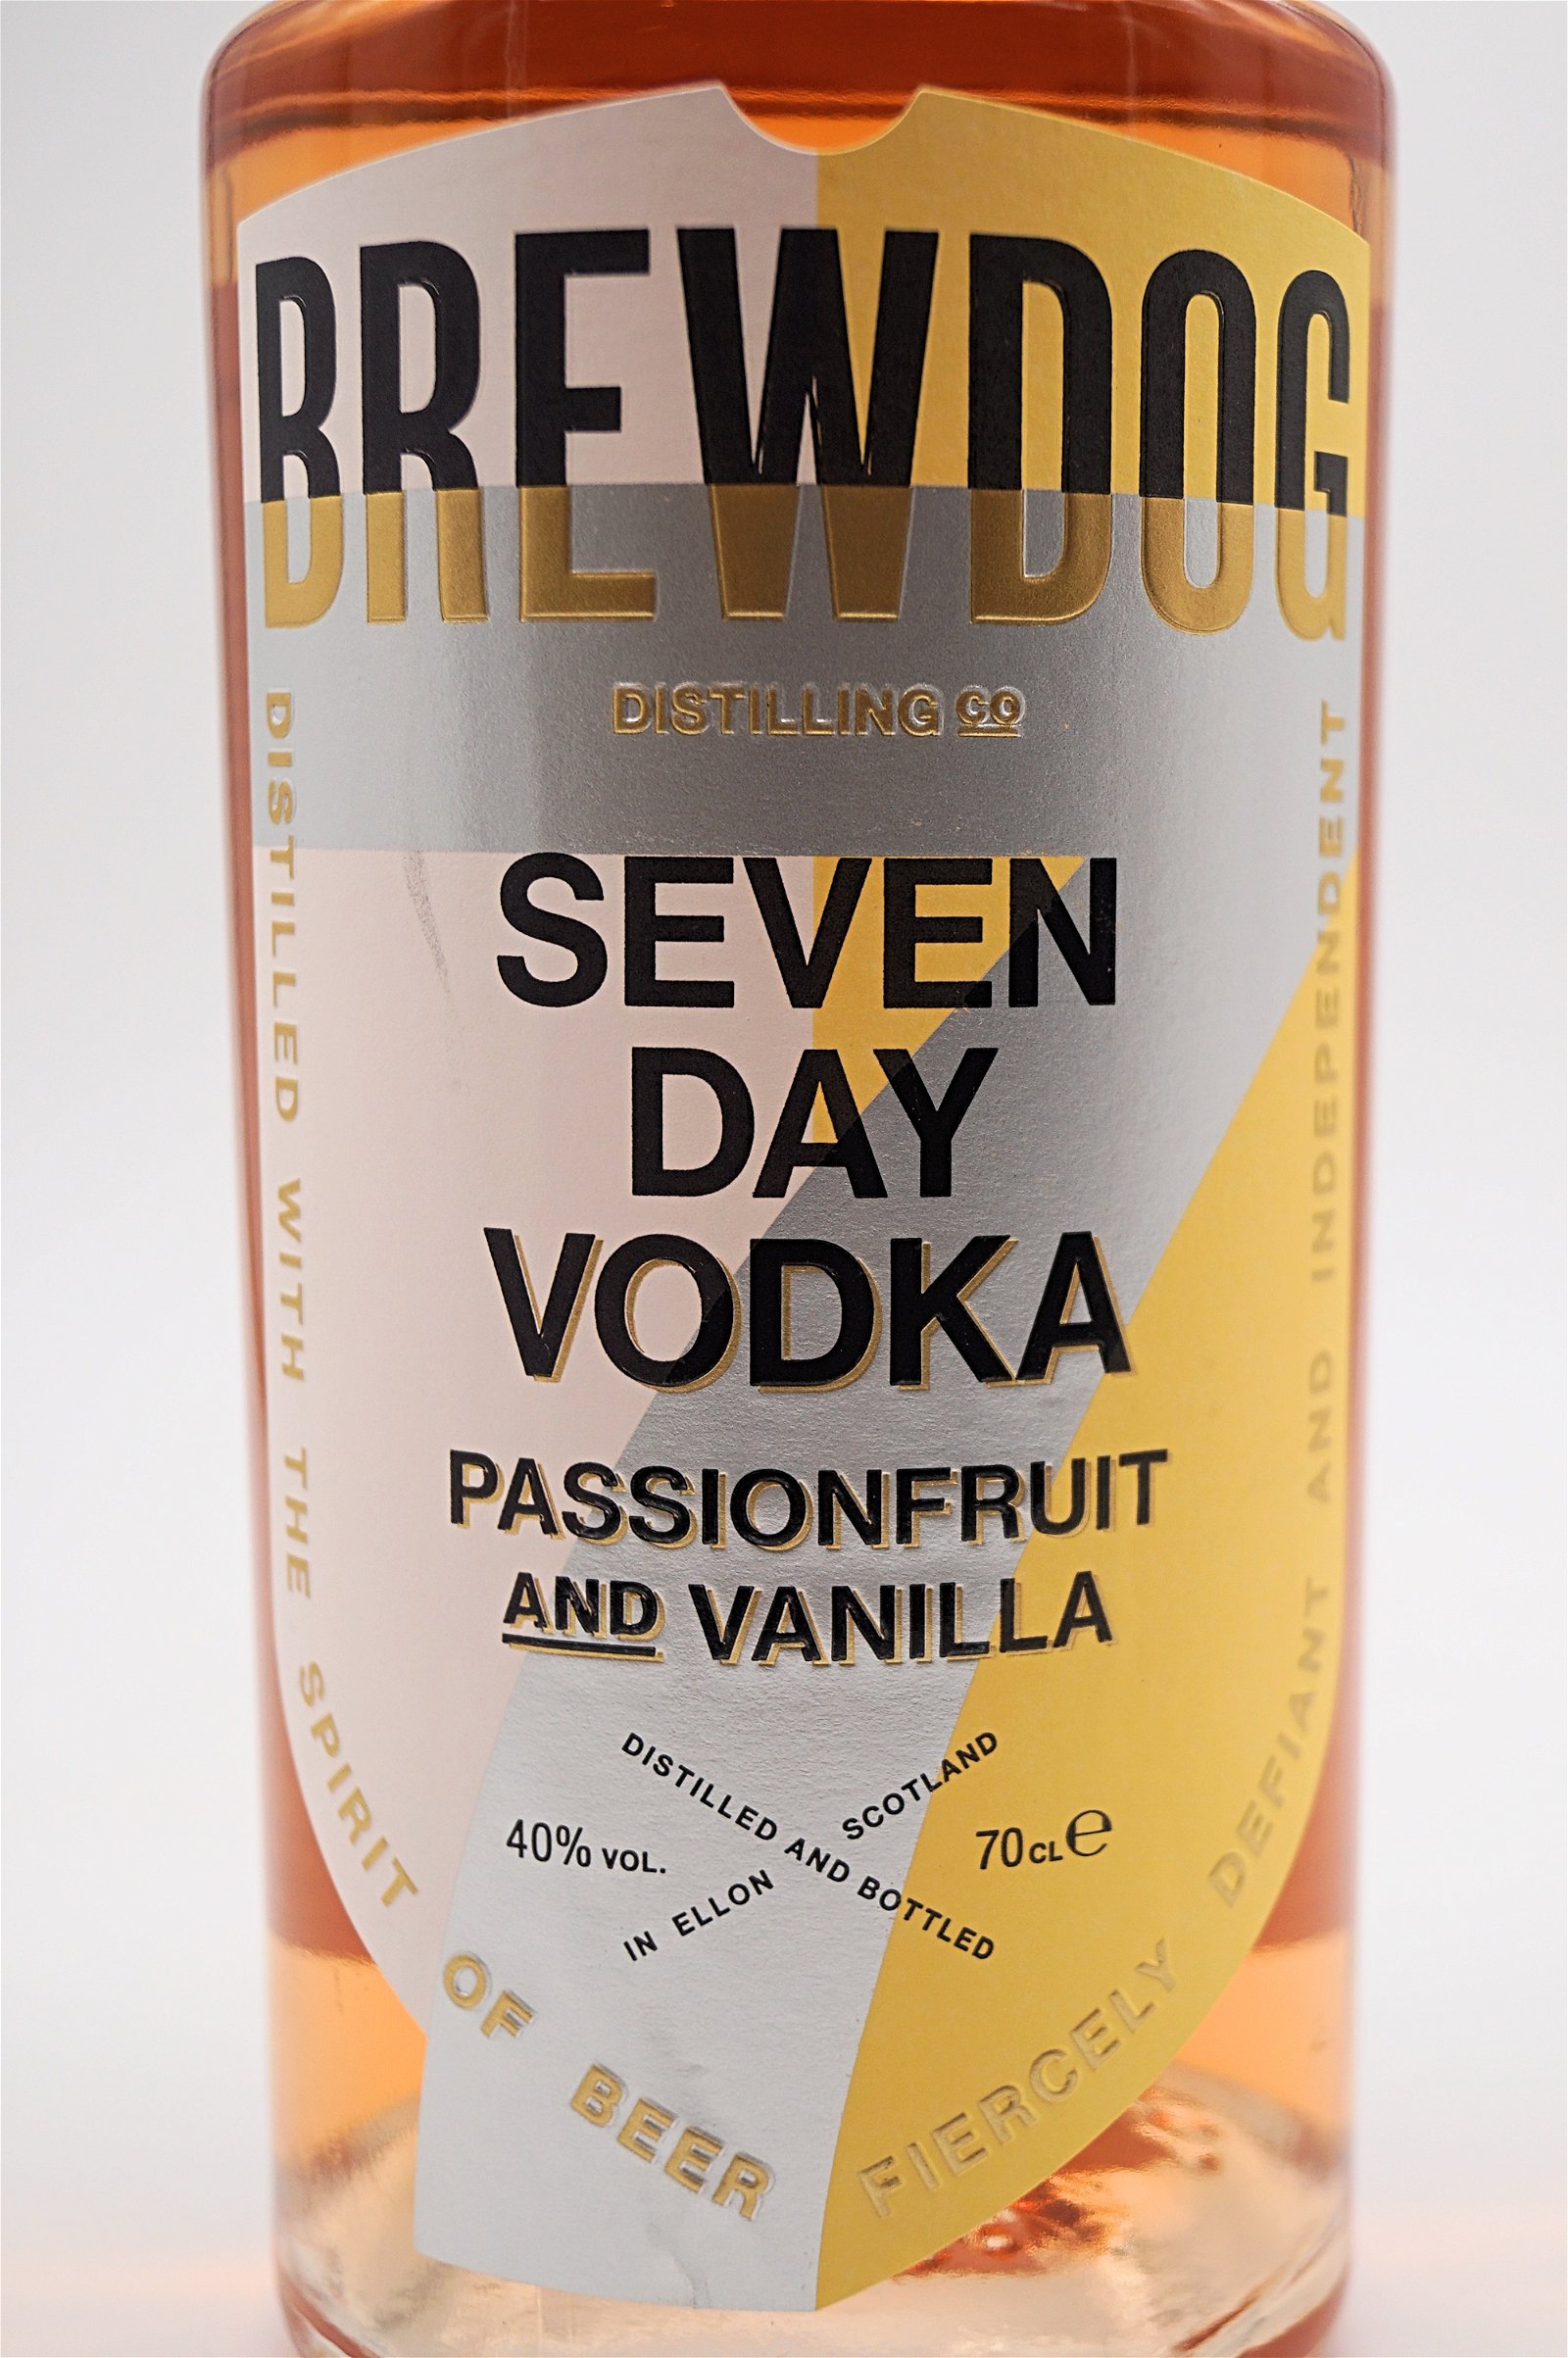 BrewDog Distilling Co. Seven Day Vodka Passionfruit and Vanilla